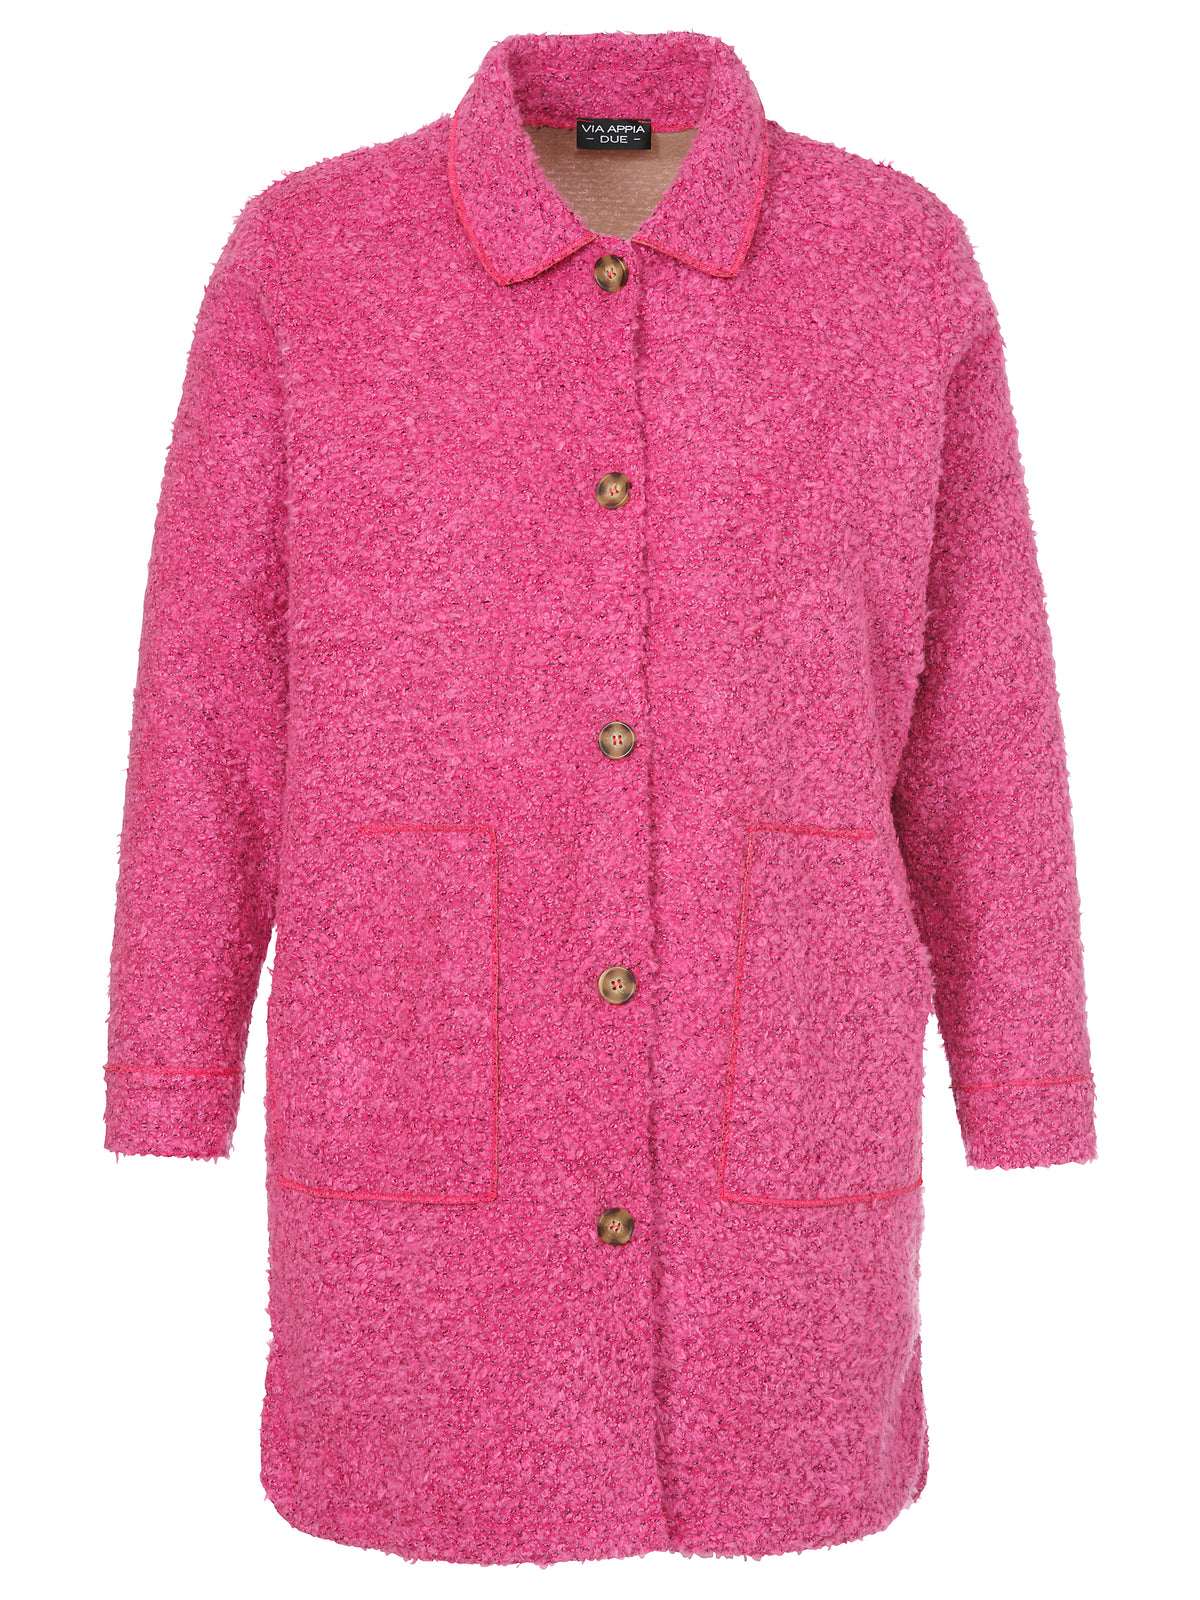 Via Appia Due Textured Coat in Pink